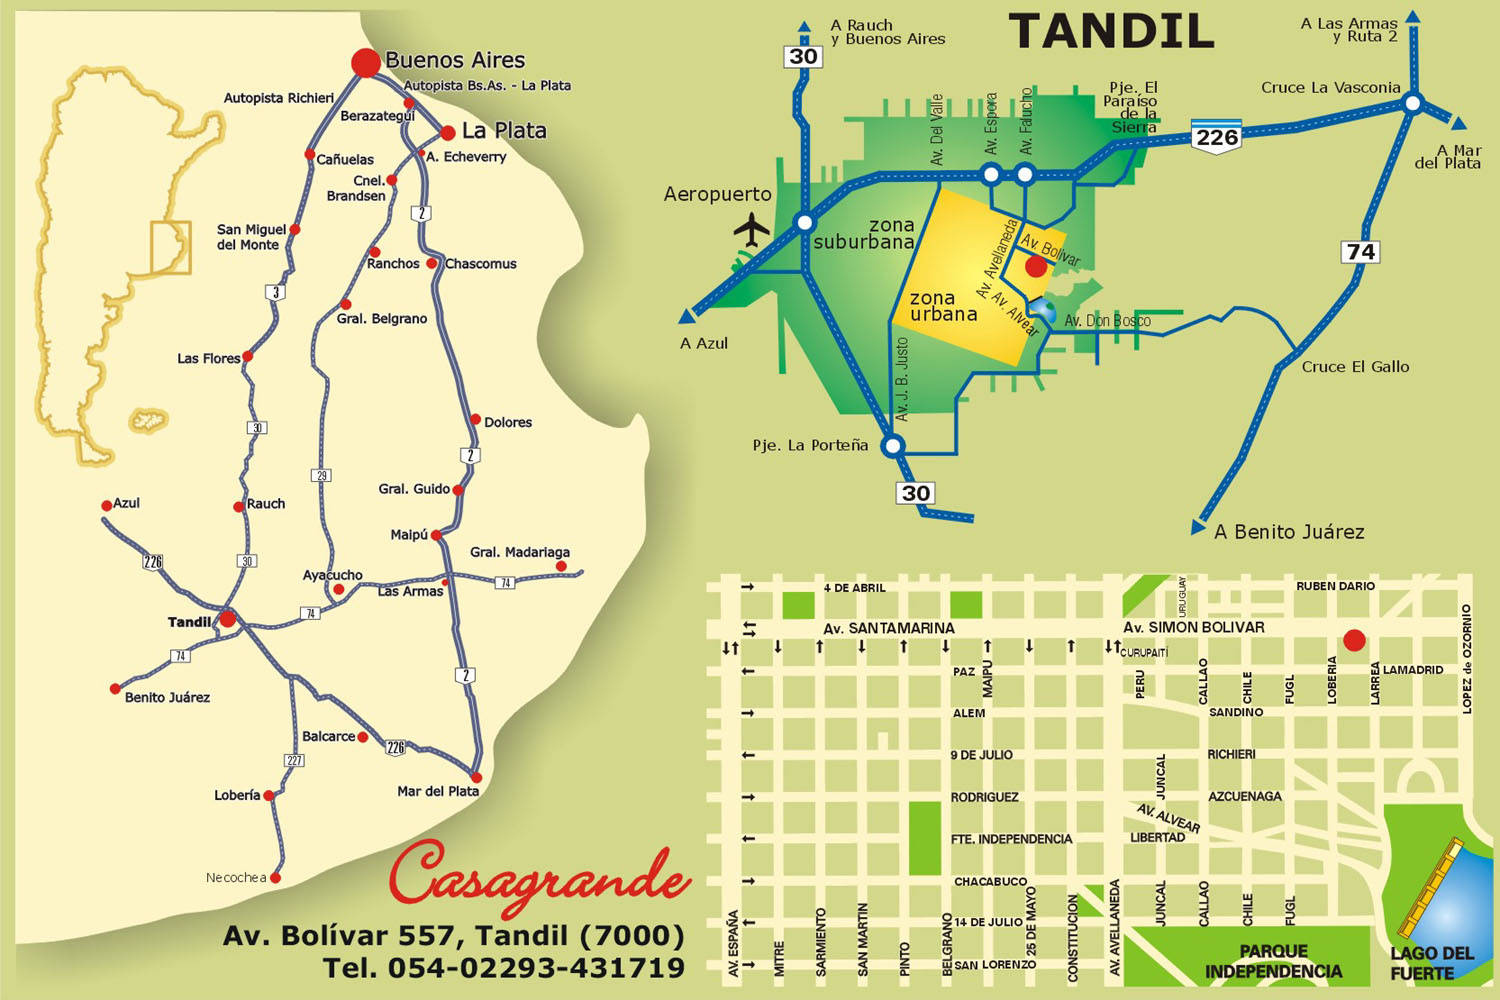  TANDIL FIN DE SEMANA LARGO 25 FEB-SUSPENDIDA-  Mapa+tandil